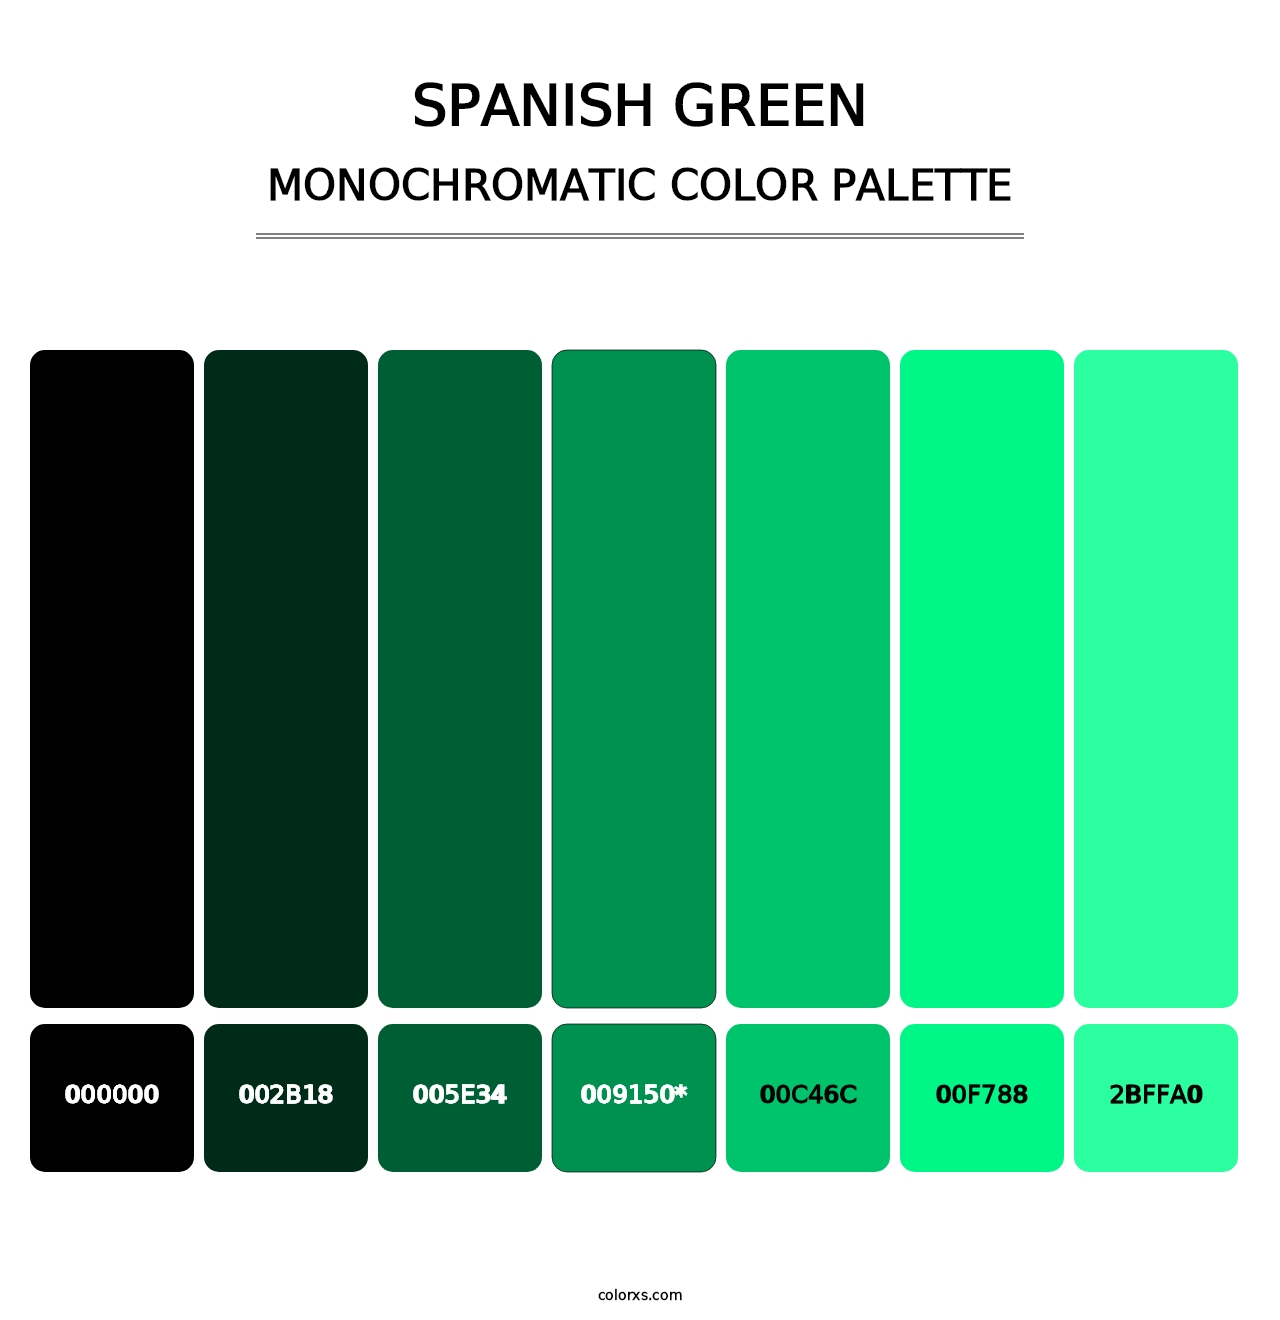 Spanish Green - Monochromatic Color Palette